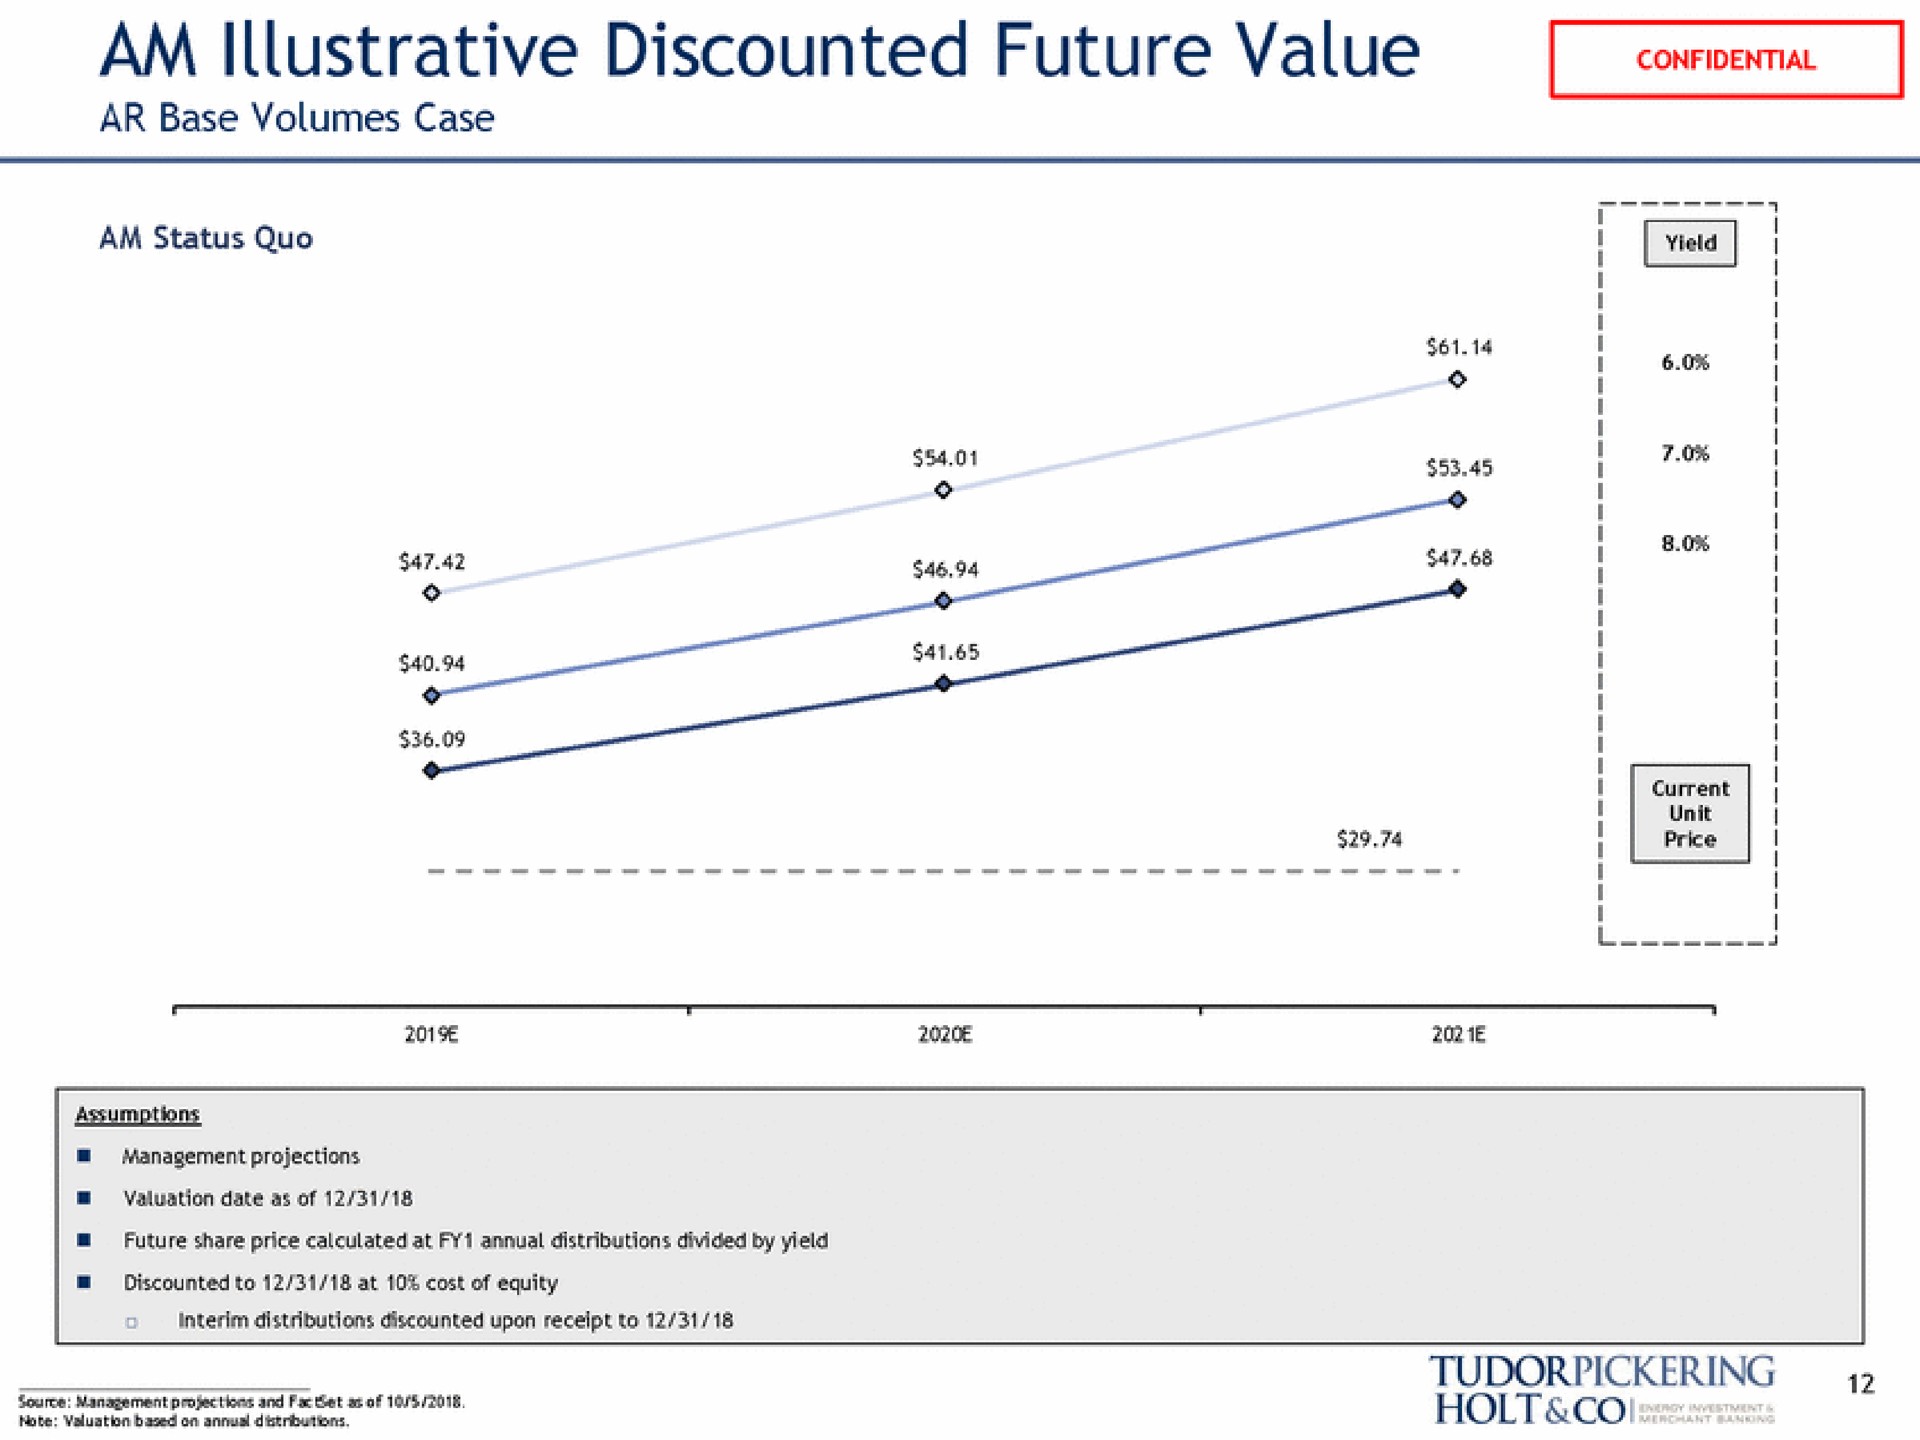 am illustrative discounted future value i price fate based on holt | Tudor, Pickering, Holt & Co